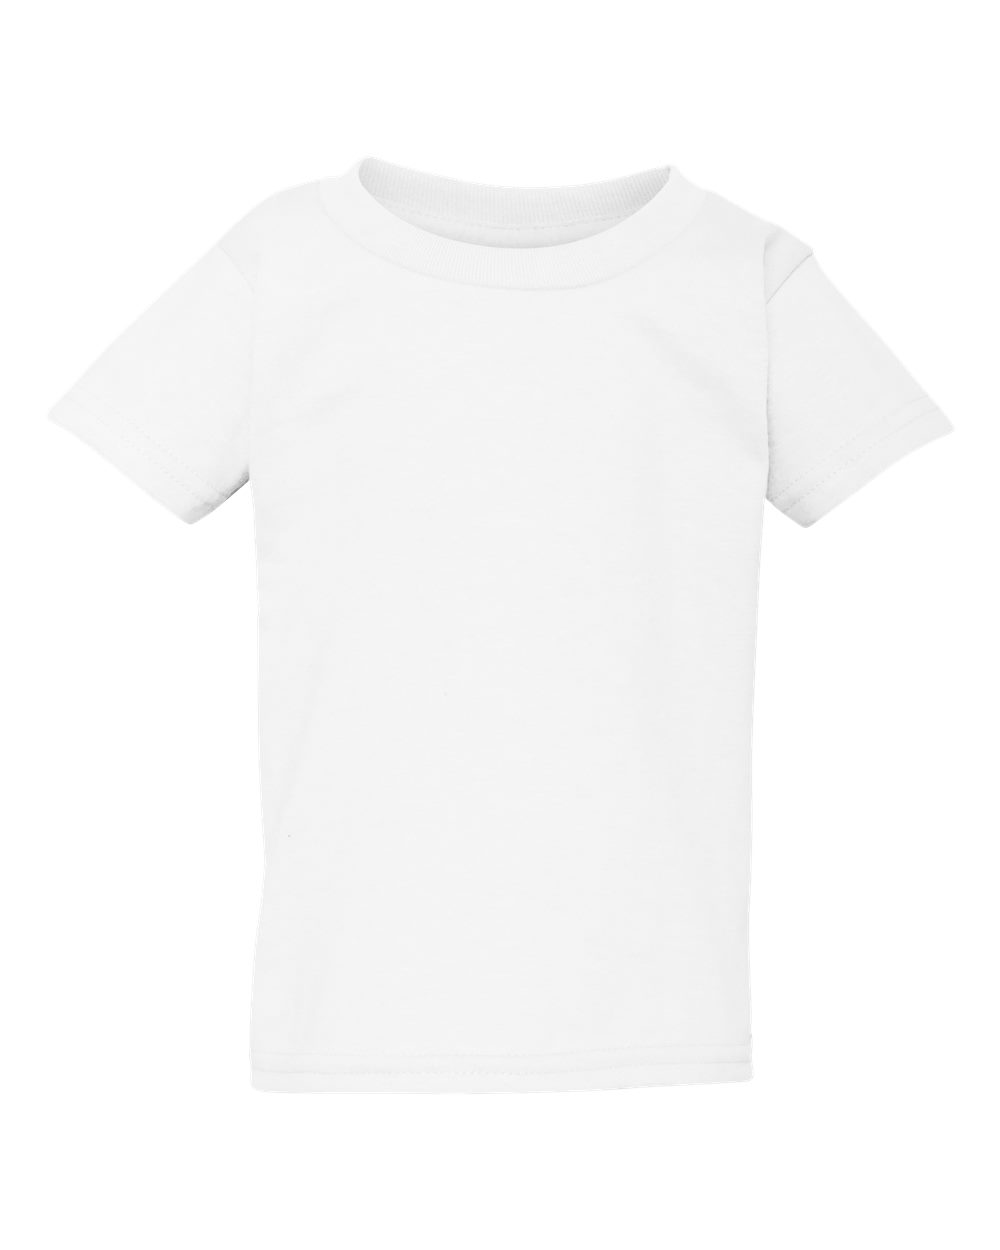 Heavy Cotton™ Raglan Three-Quarter Sleeve T-Shirt - Gildan 5700